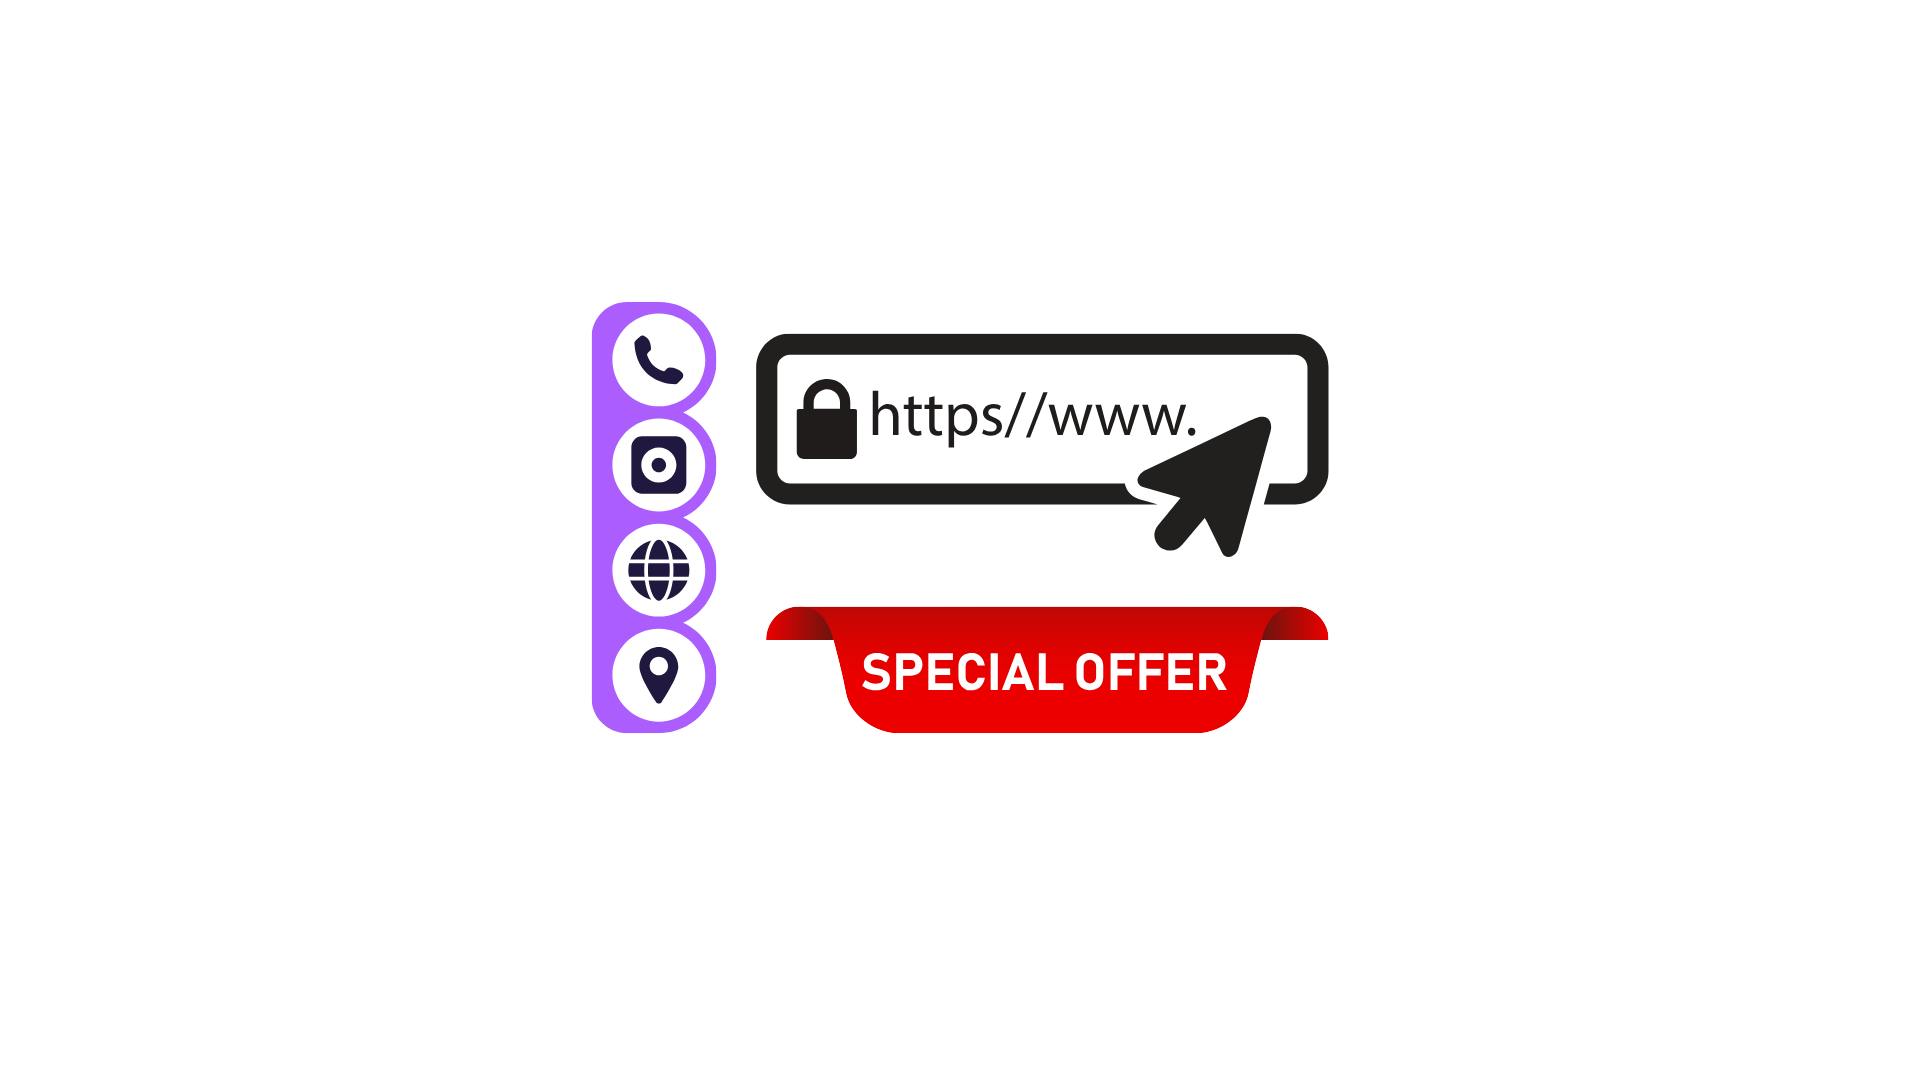 website url, offers